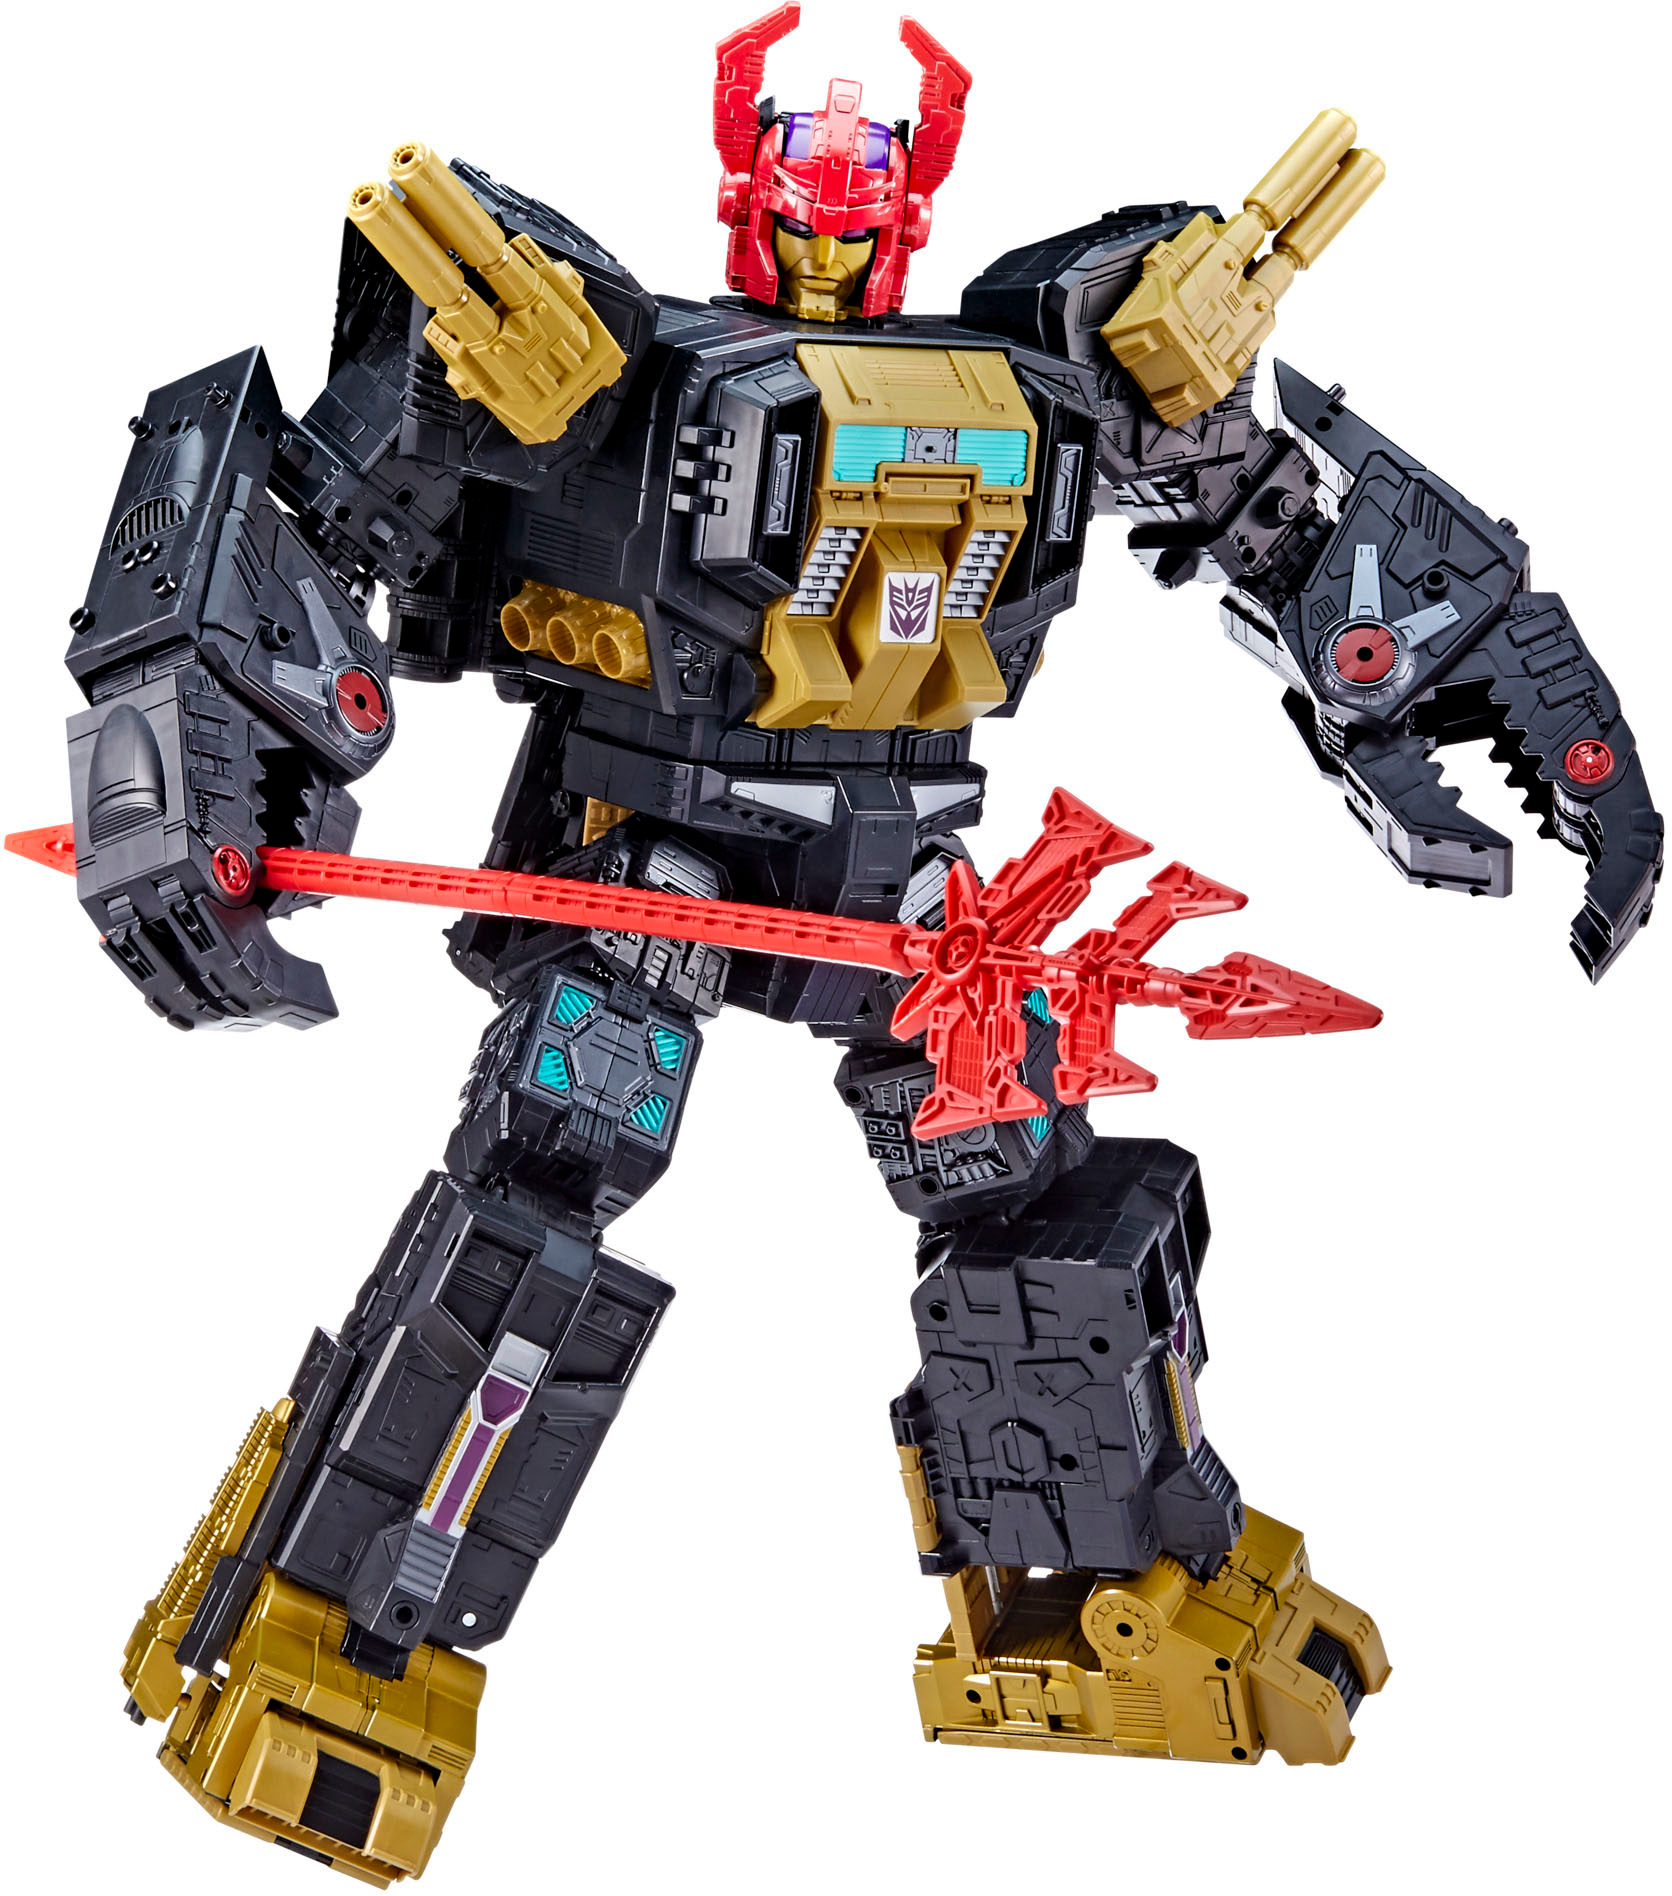 Angle View: Transformers - Generations Selects Titan Black Zarak